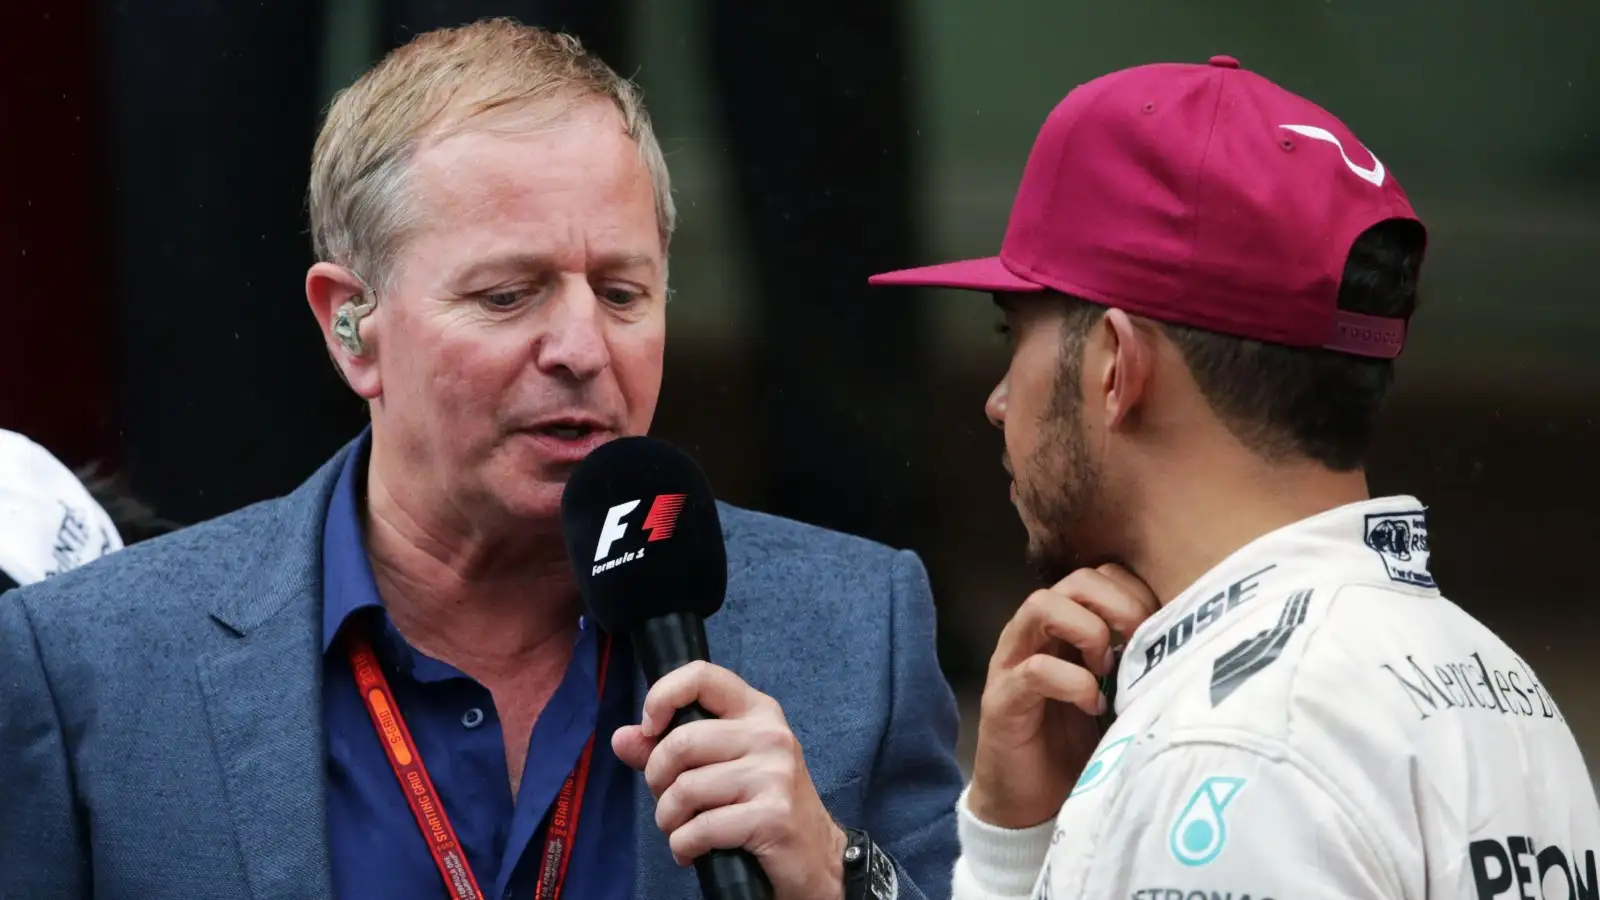 Martin Brundle interviewing Lewis Hamilton after the 2016 Monaco Grand Prix.